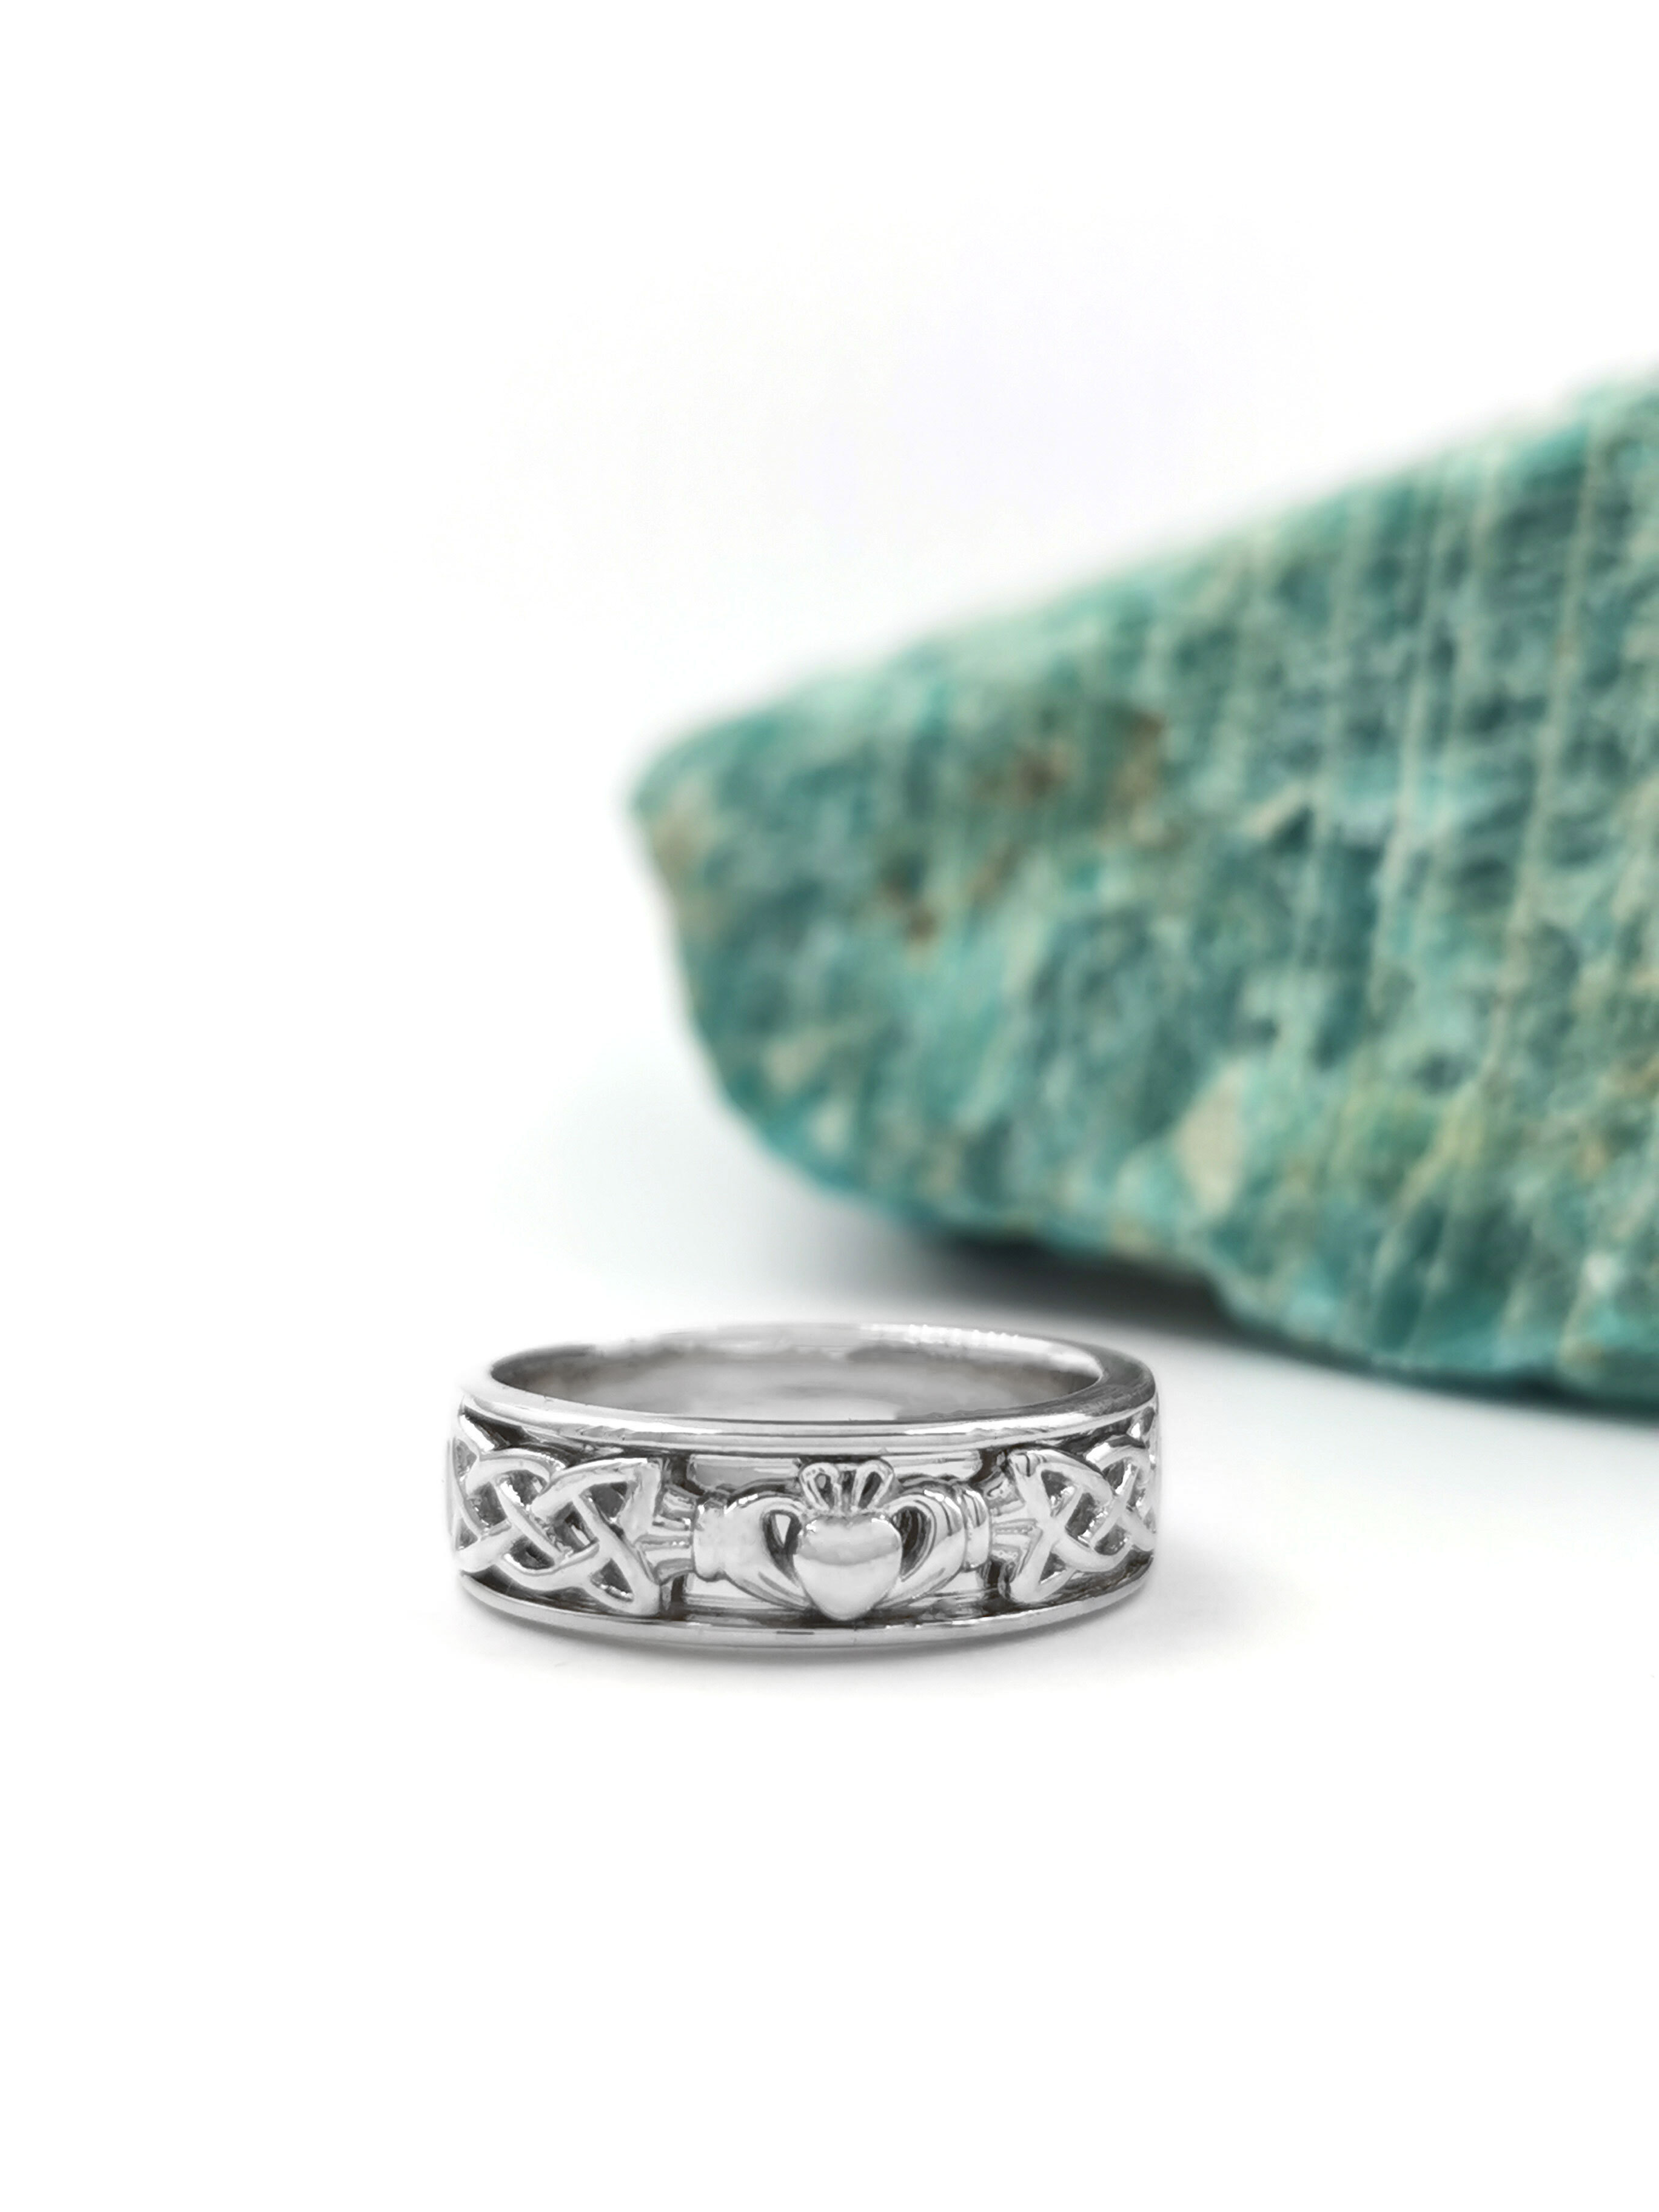 Claddagh Celtic Knot Ring, From Ireland | My Irish Jeweler